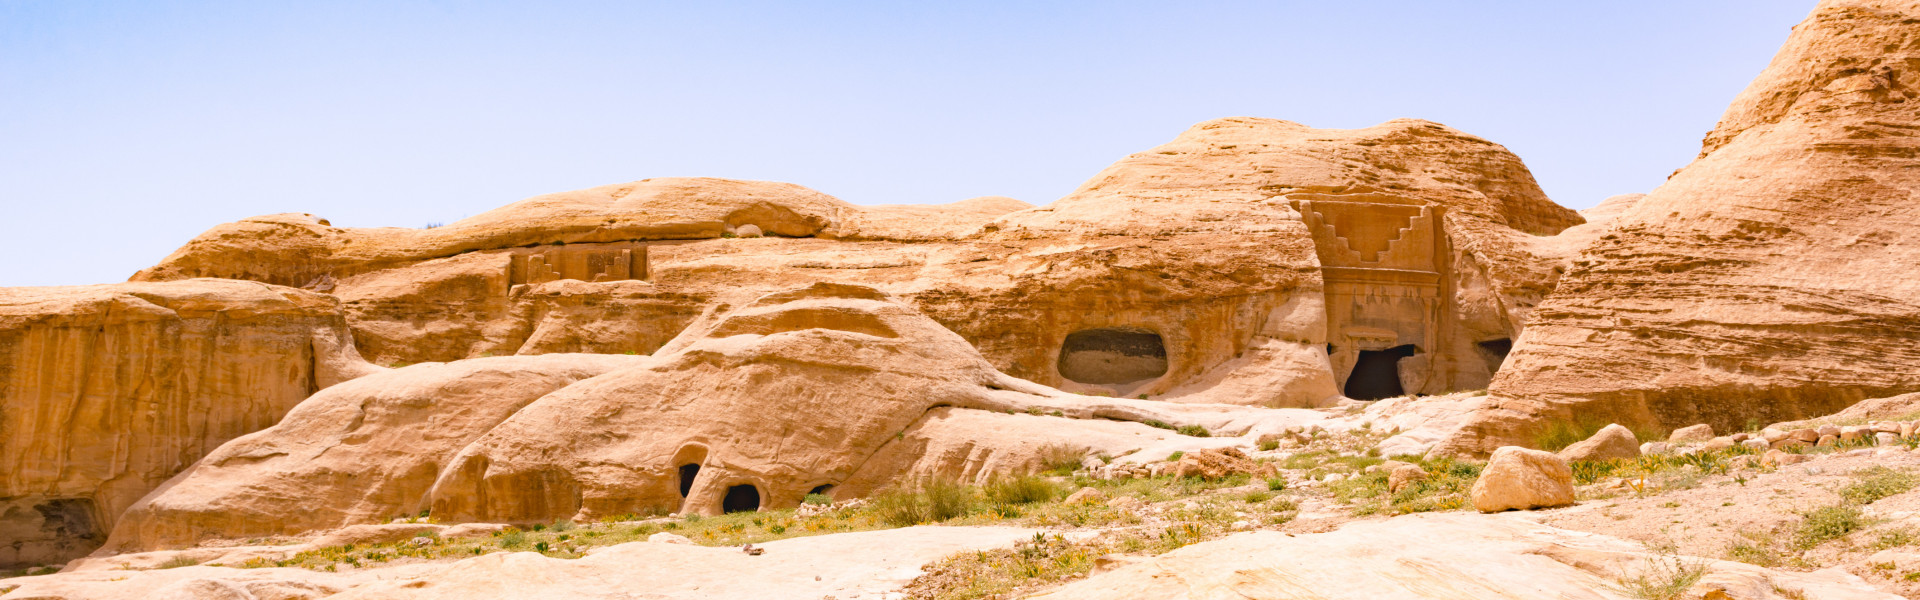 Destination image of Jordan